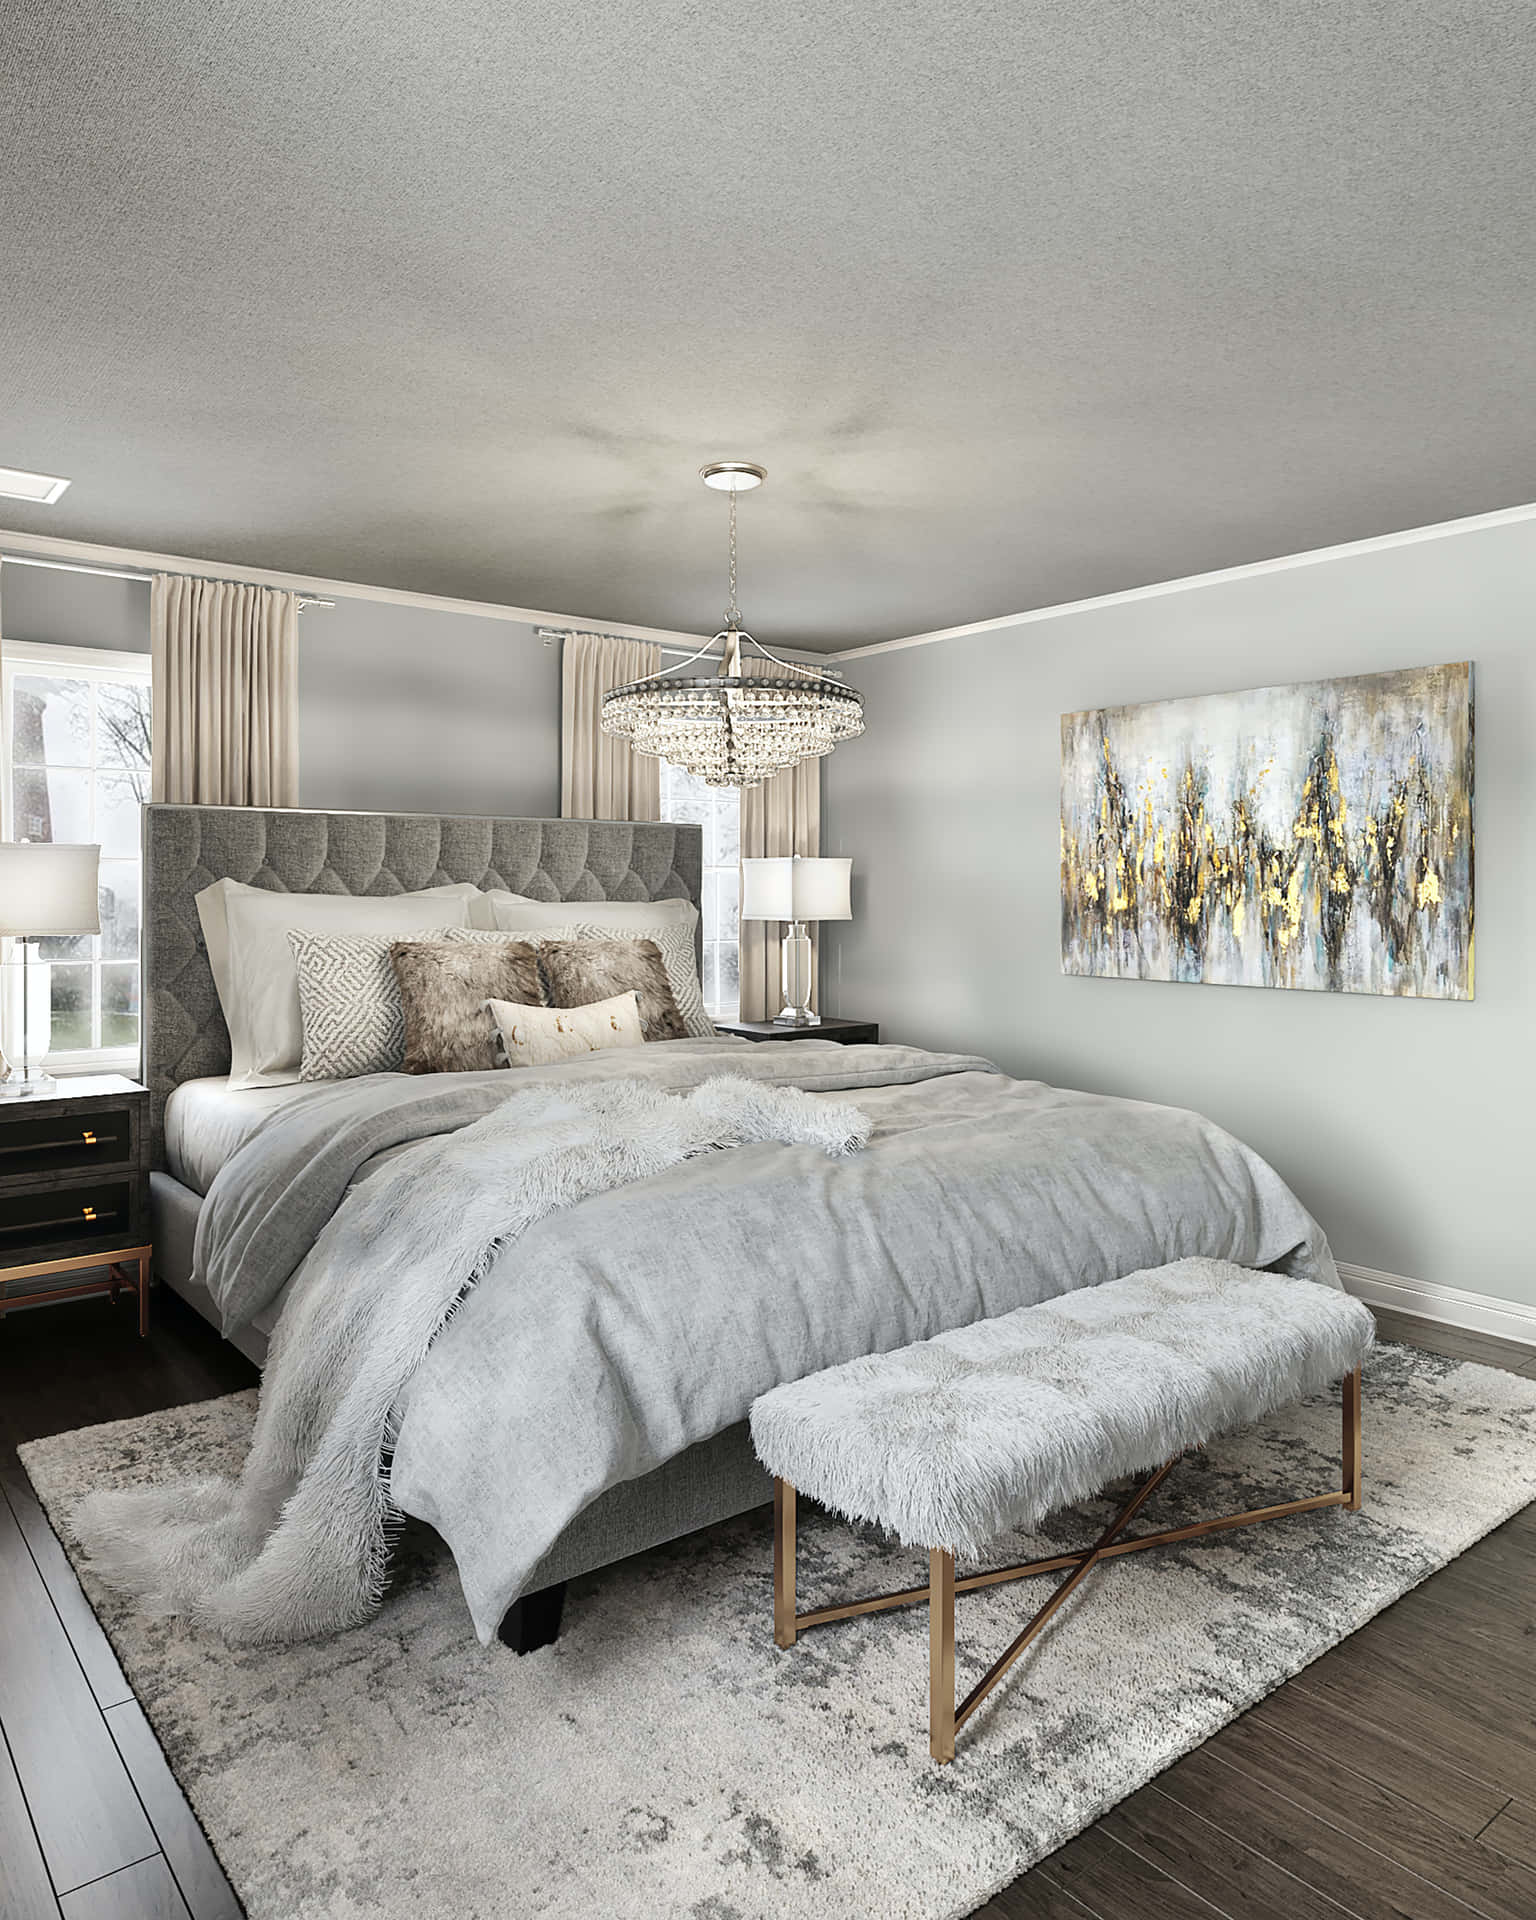 Cozy Modern Bedroom With Stylish Decor